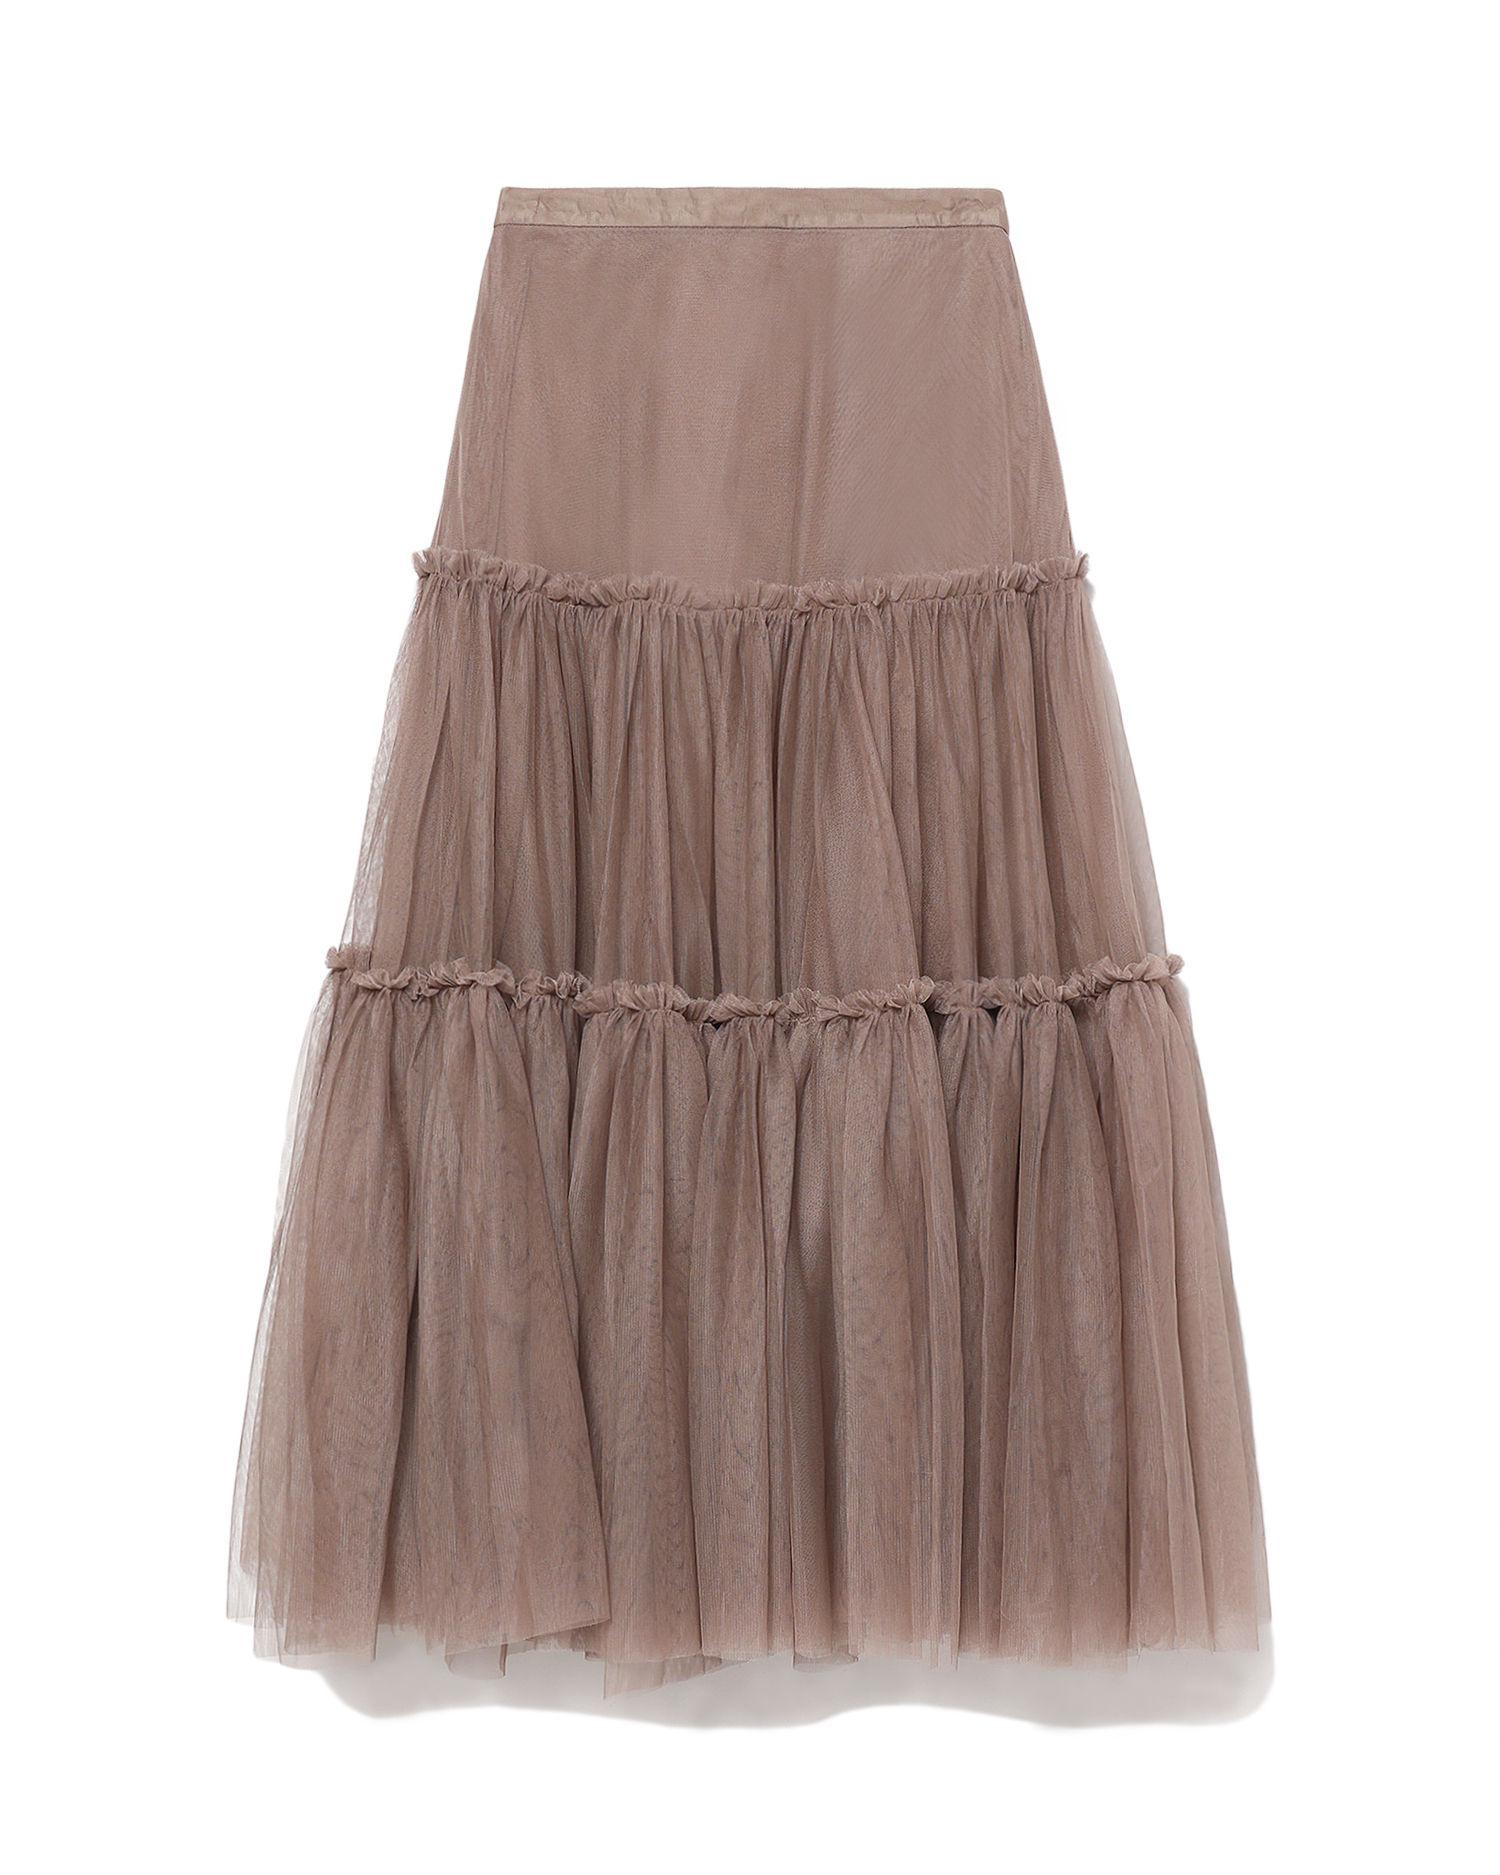 Textured midi skirt by ROKH